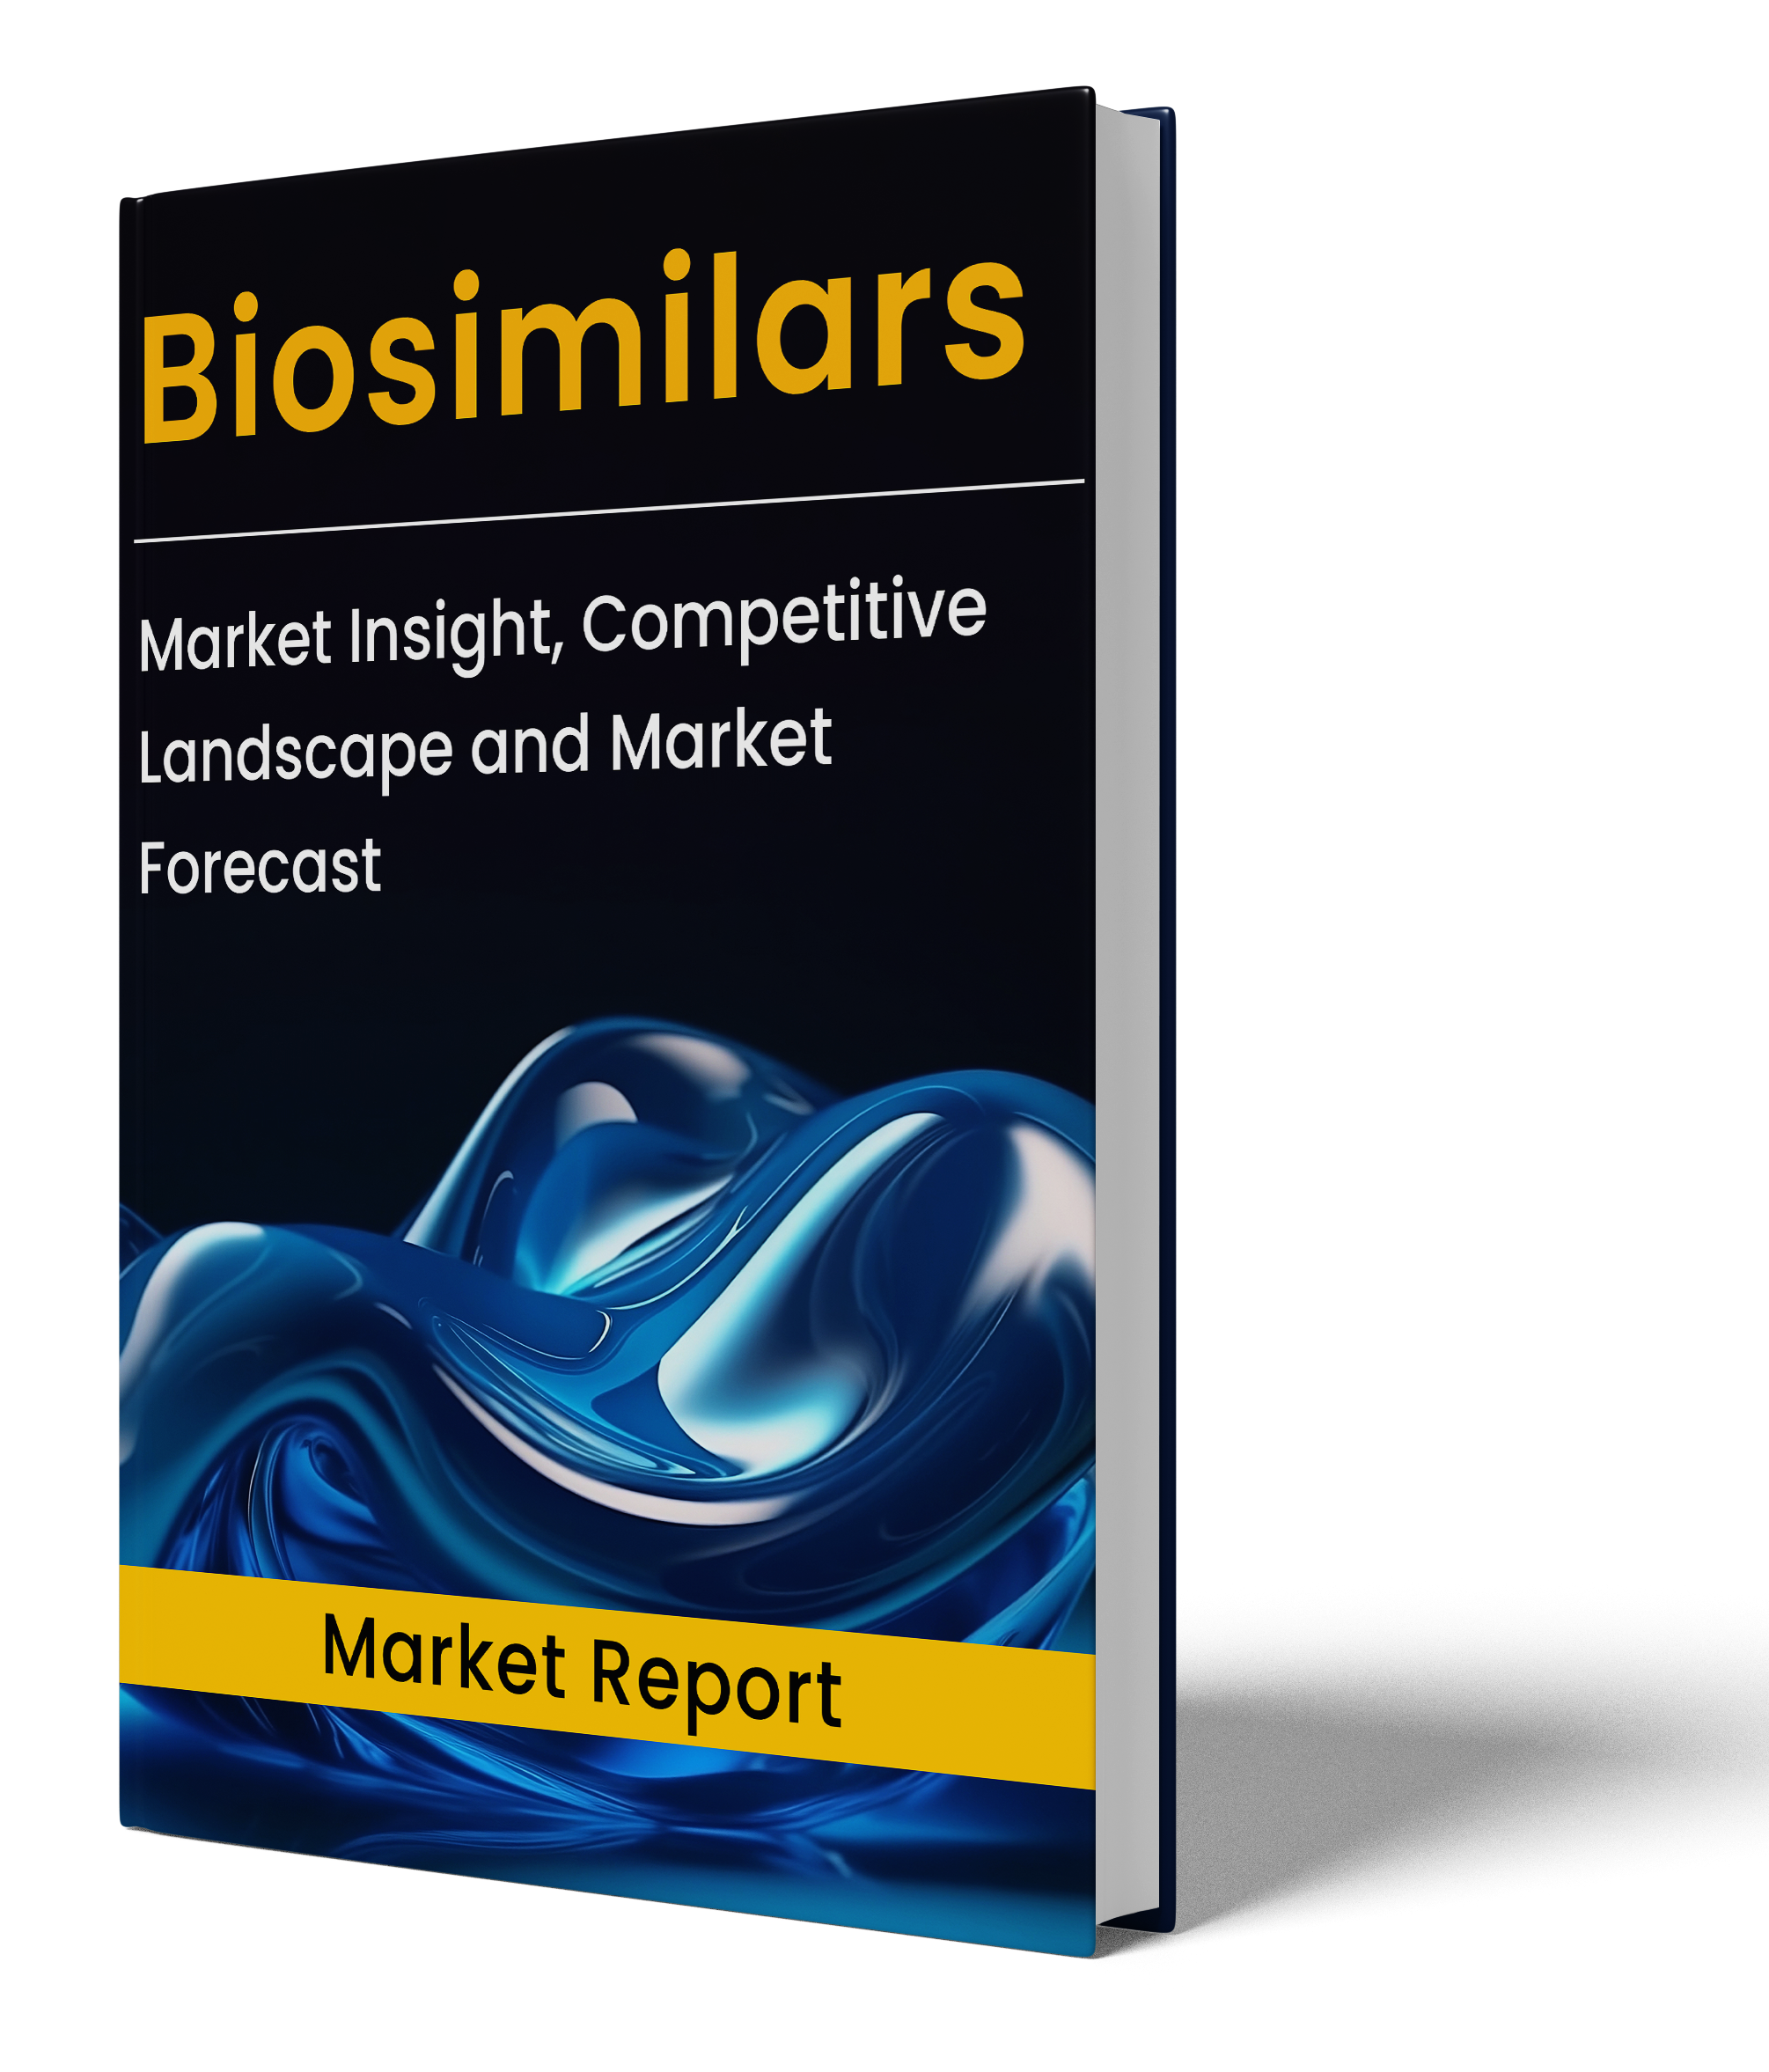 Biosimilars Market Report